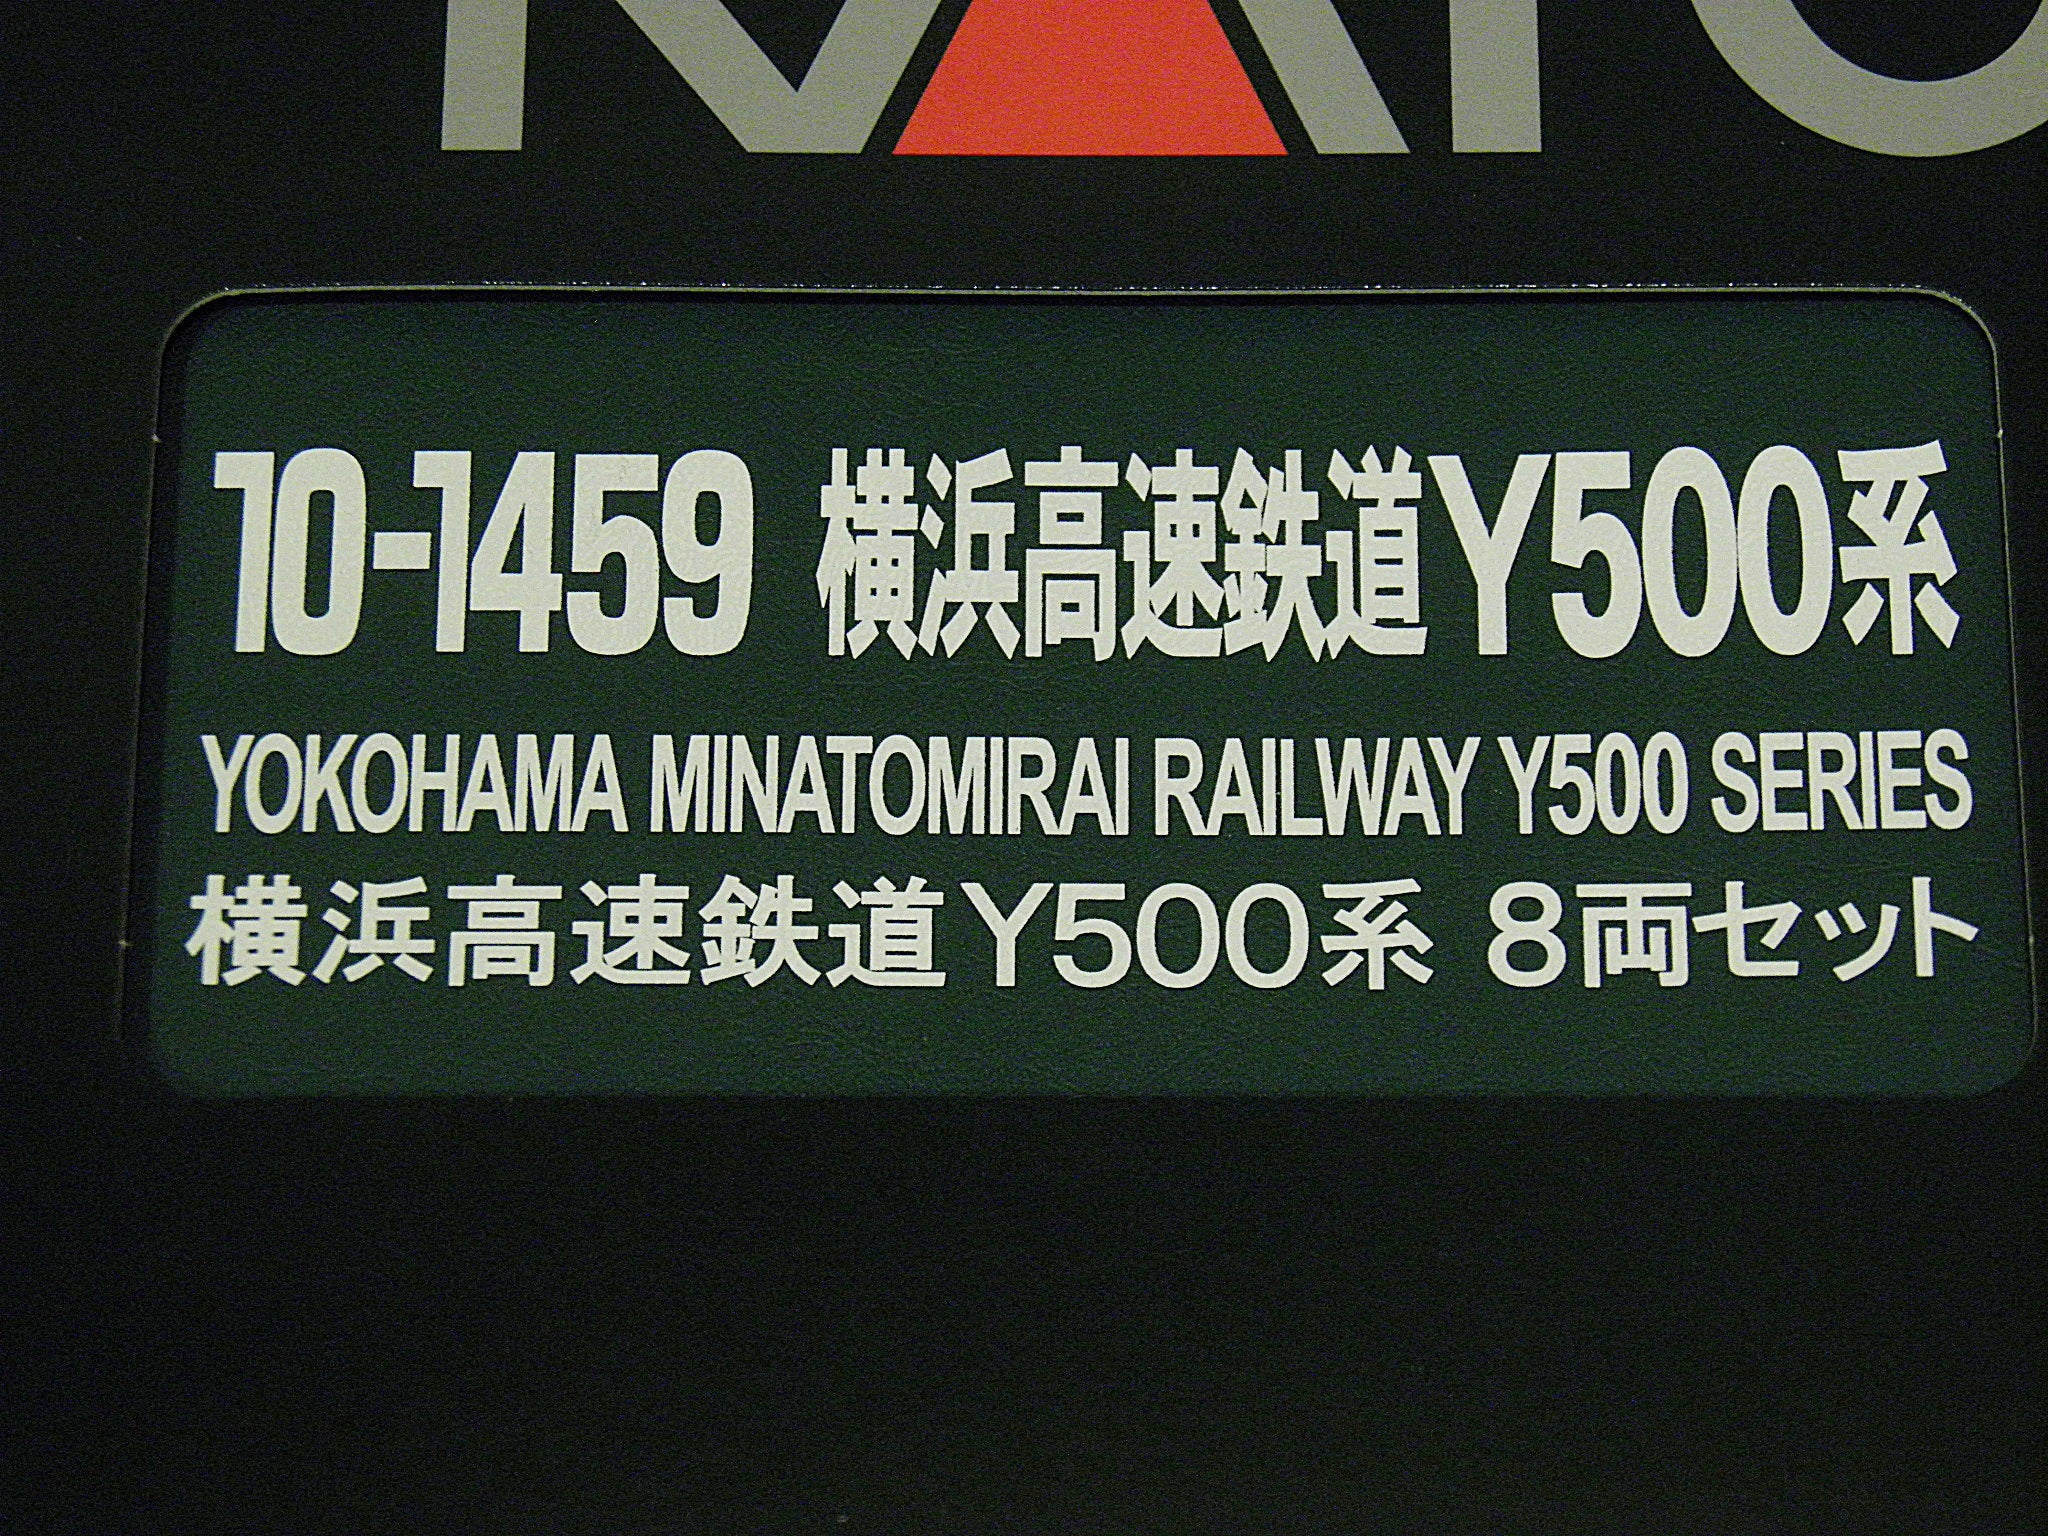 KATO 横浜高速鉄道Y500系 8両セットのレビュー的なものを書いてみる